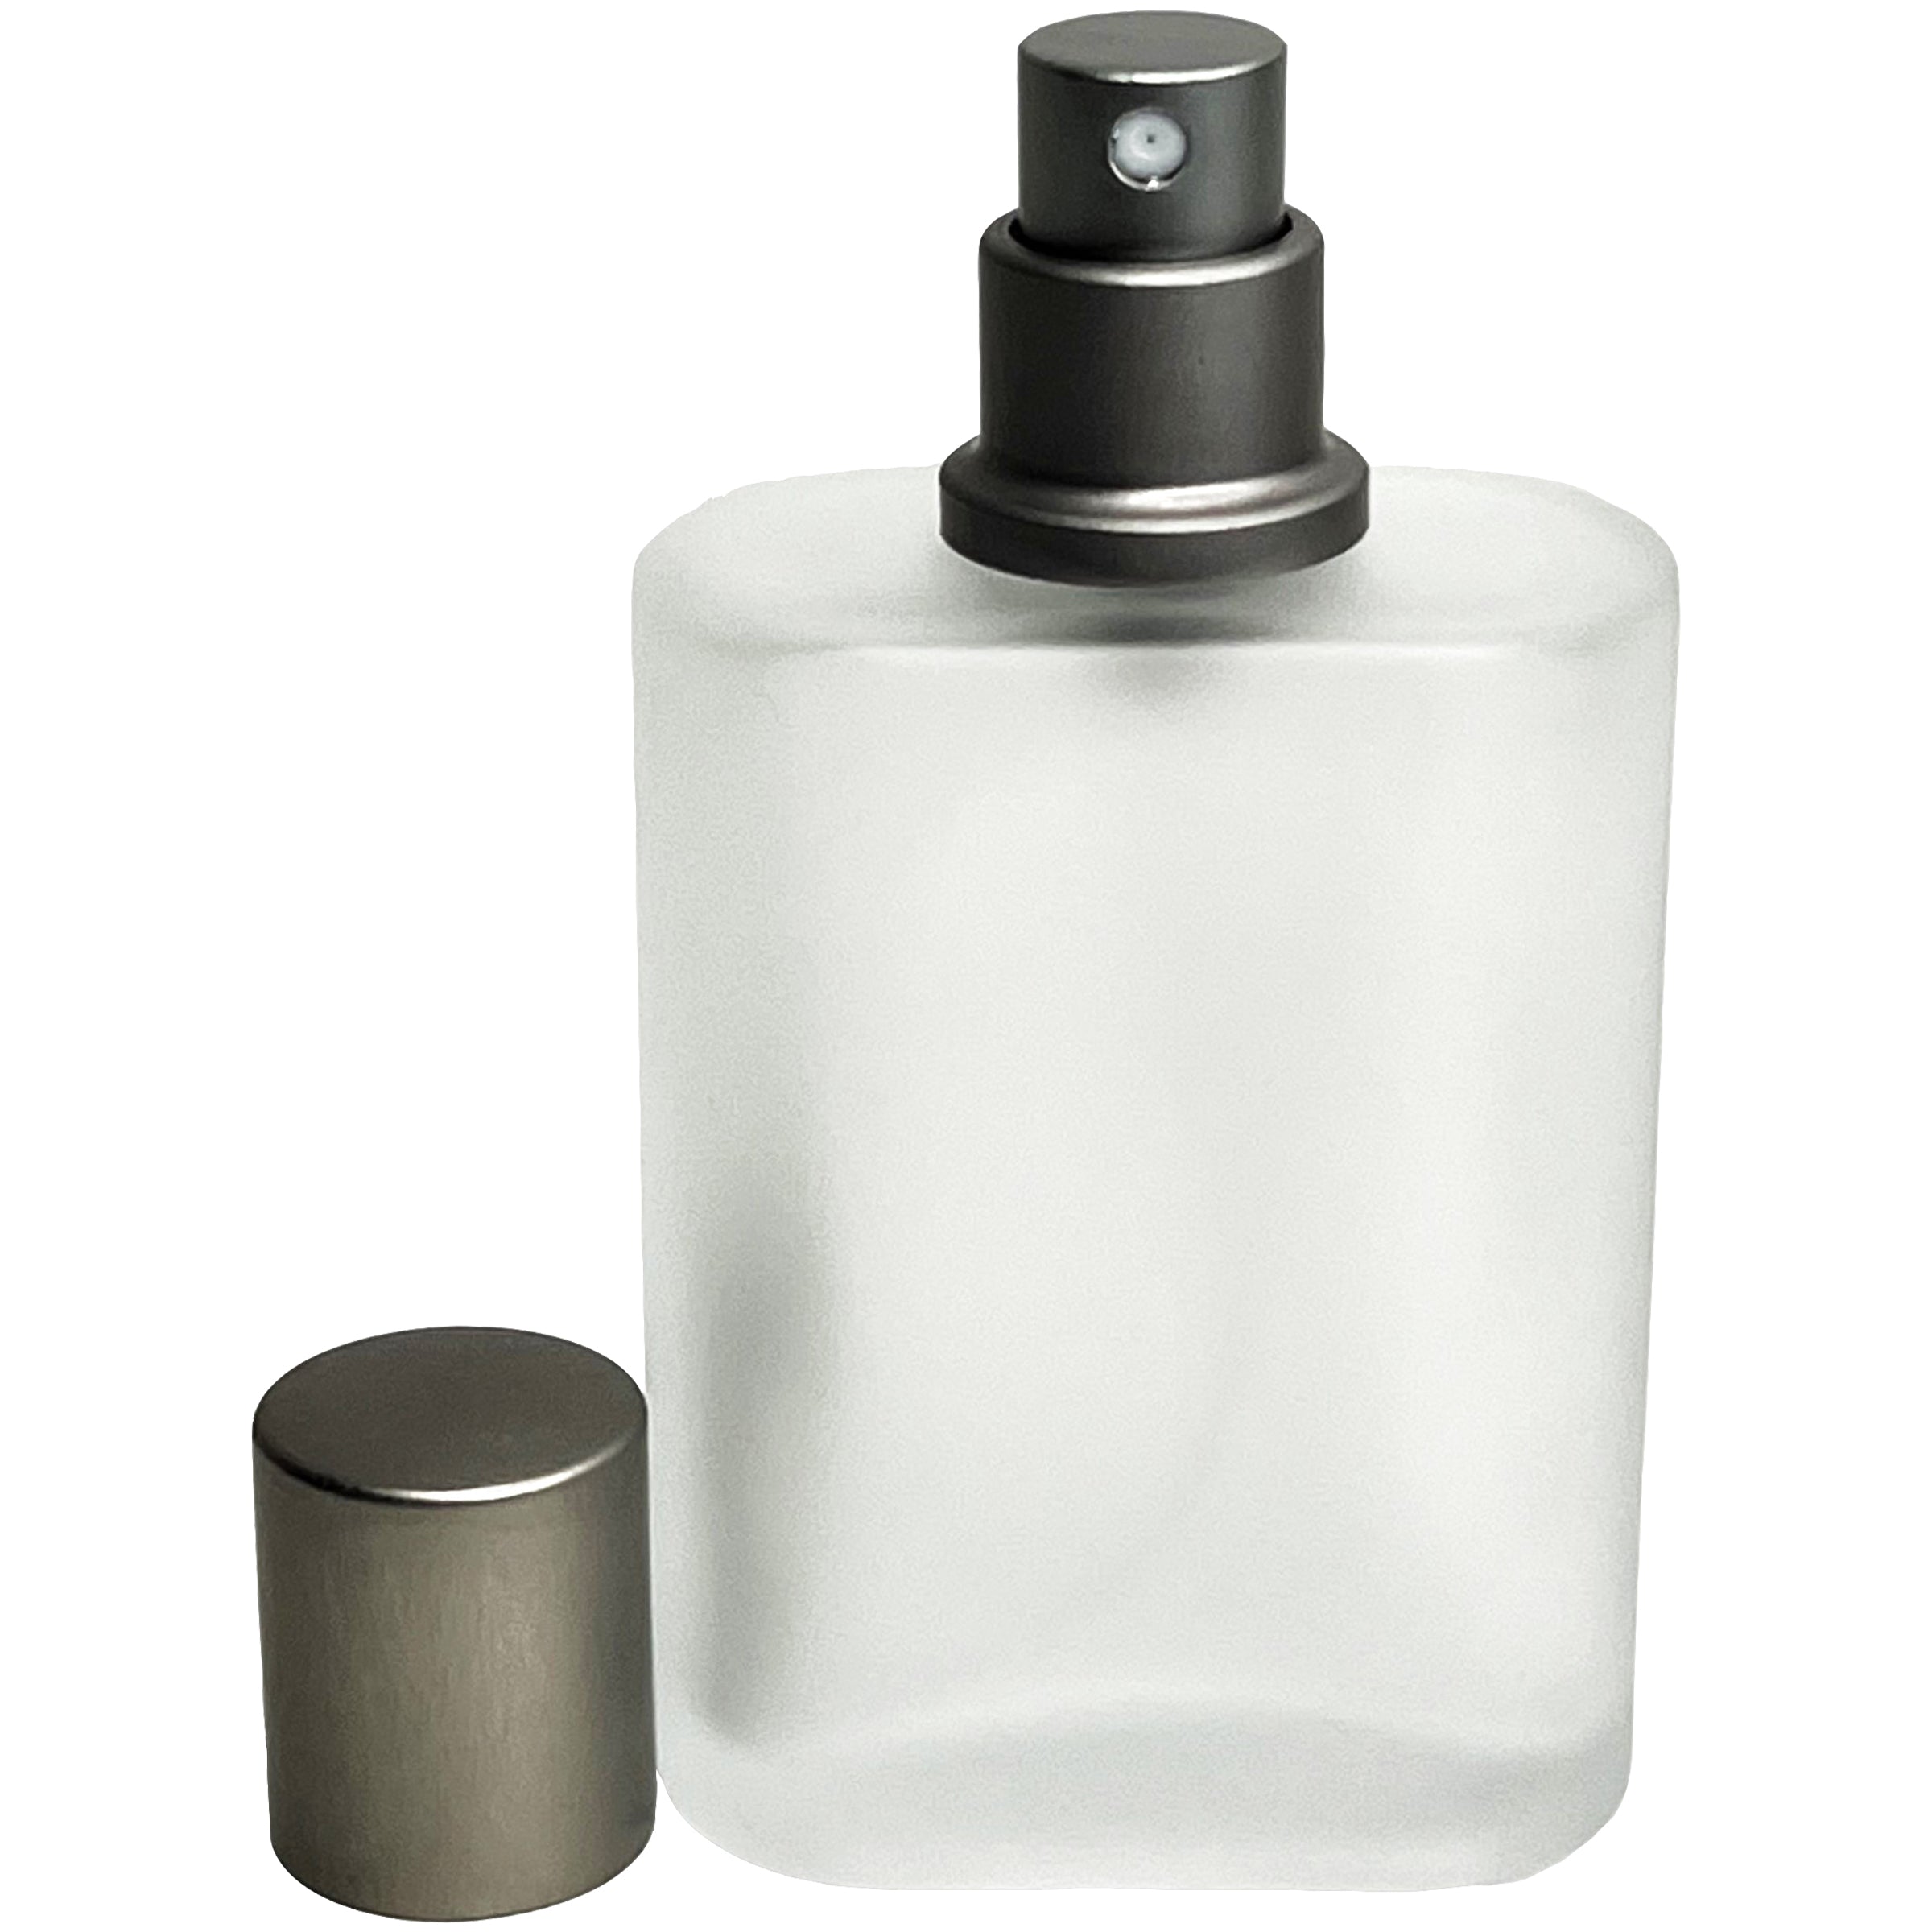 50ml 1.7oz Empty Perfume Spray Bottles Frosted Glass Matte Silver Atomizer Cap